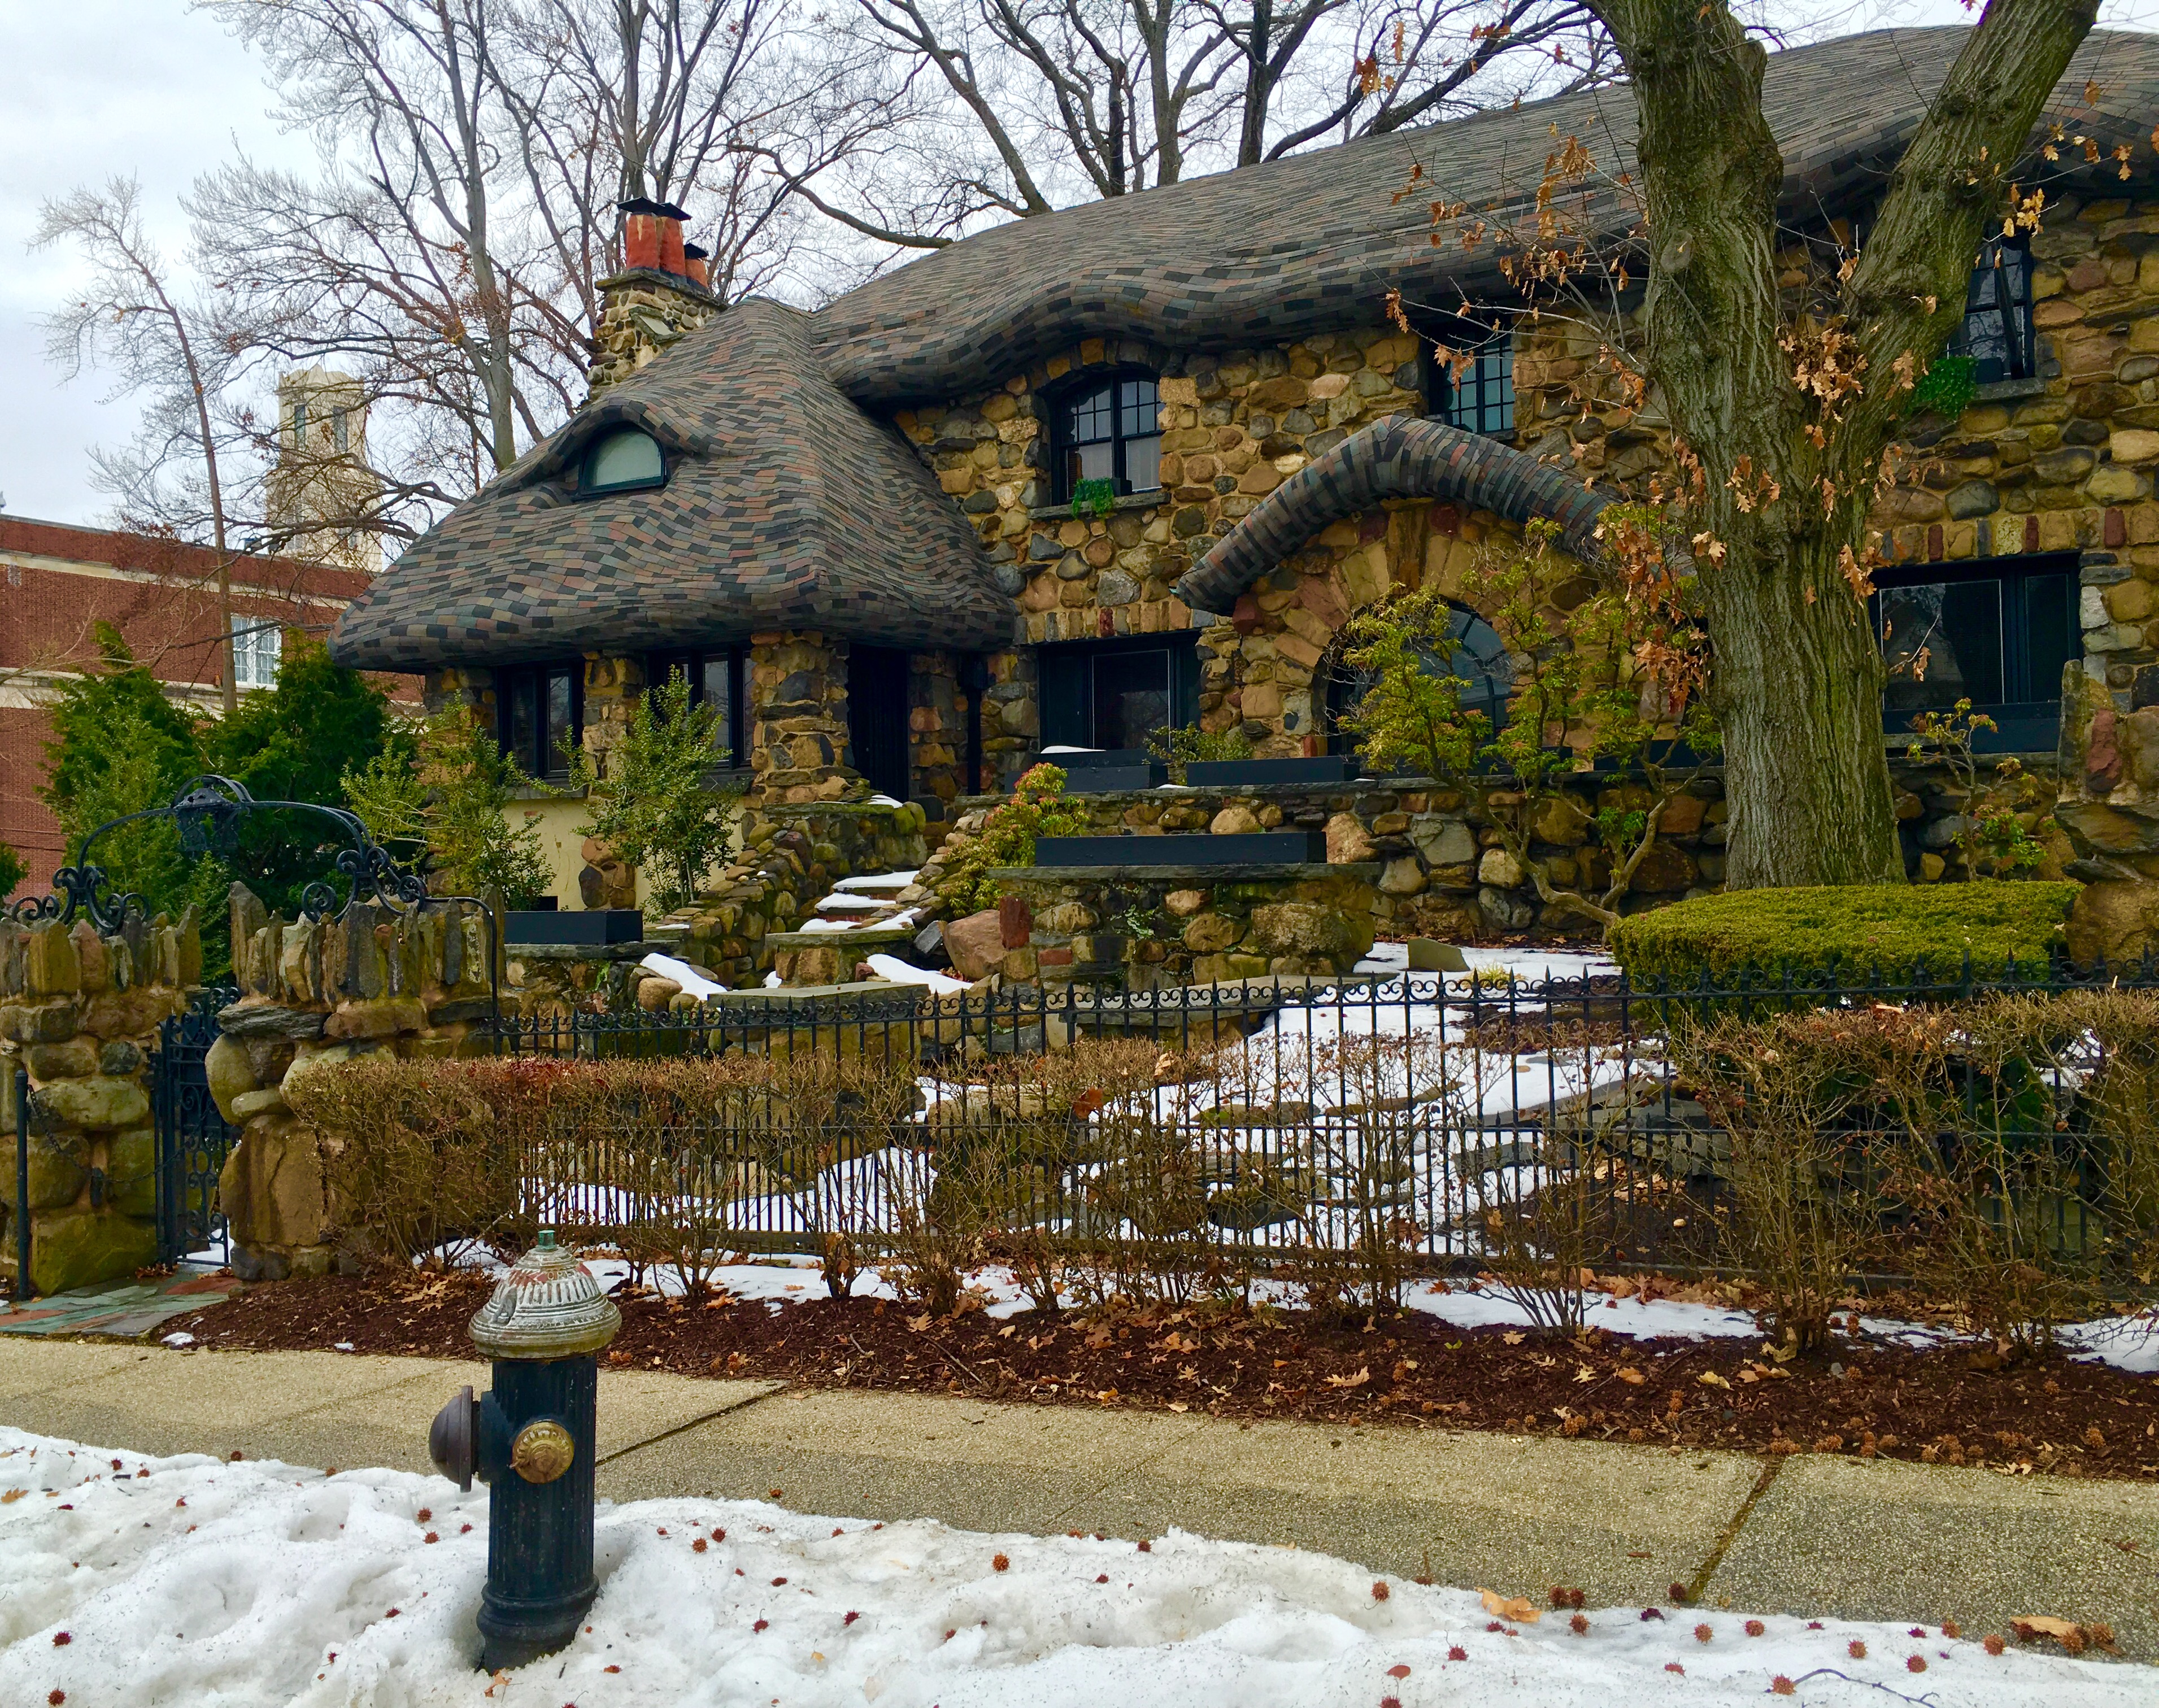 The Gingerbread House is a Bay Ridge icon. Photo: Lore Croghan/Brooklyn Eagle